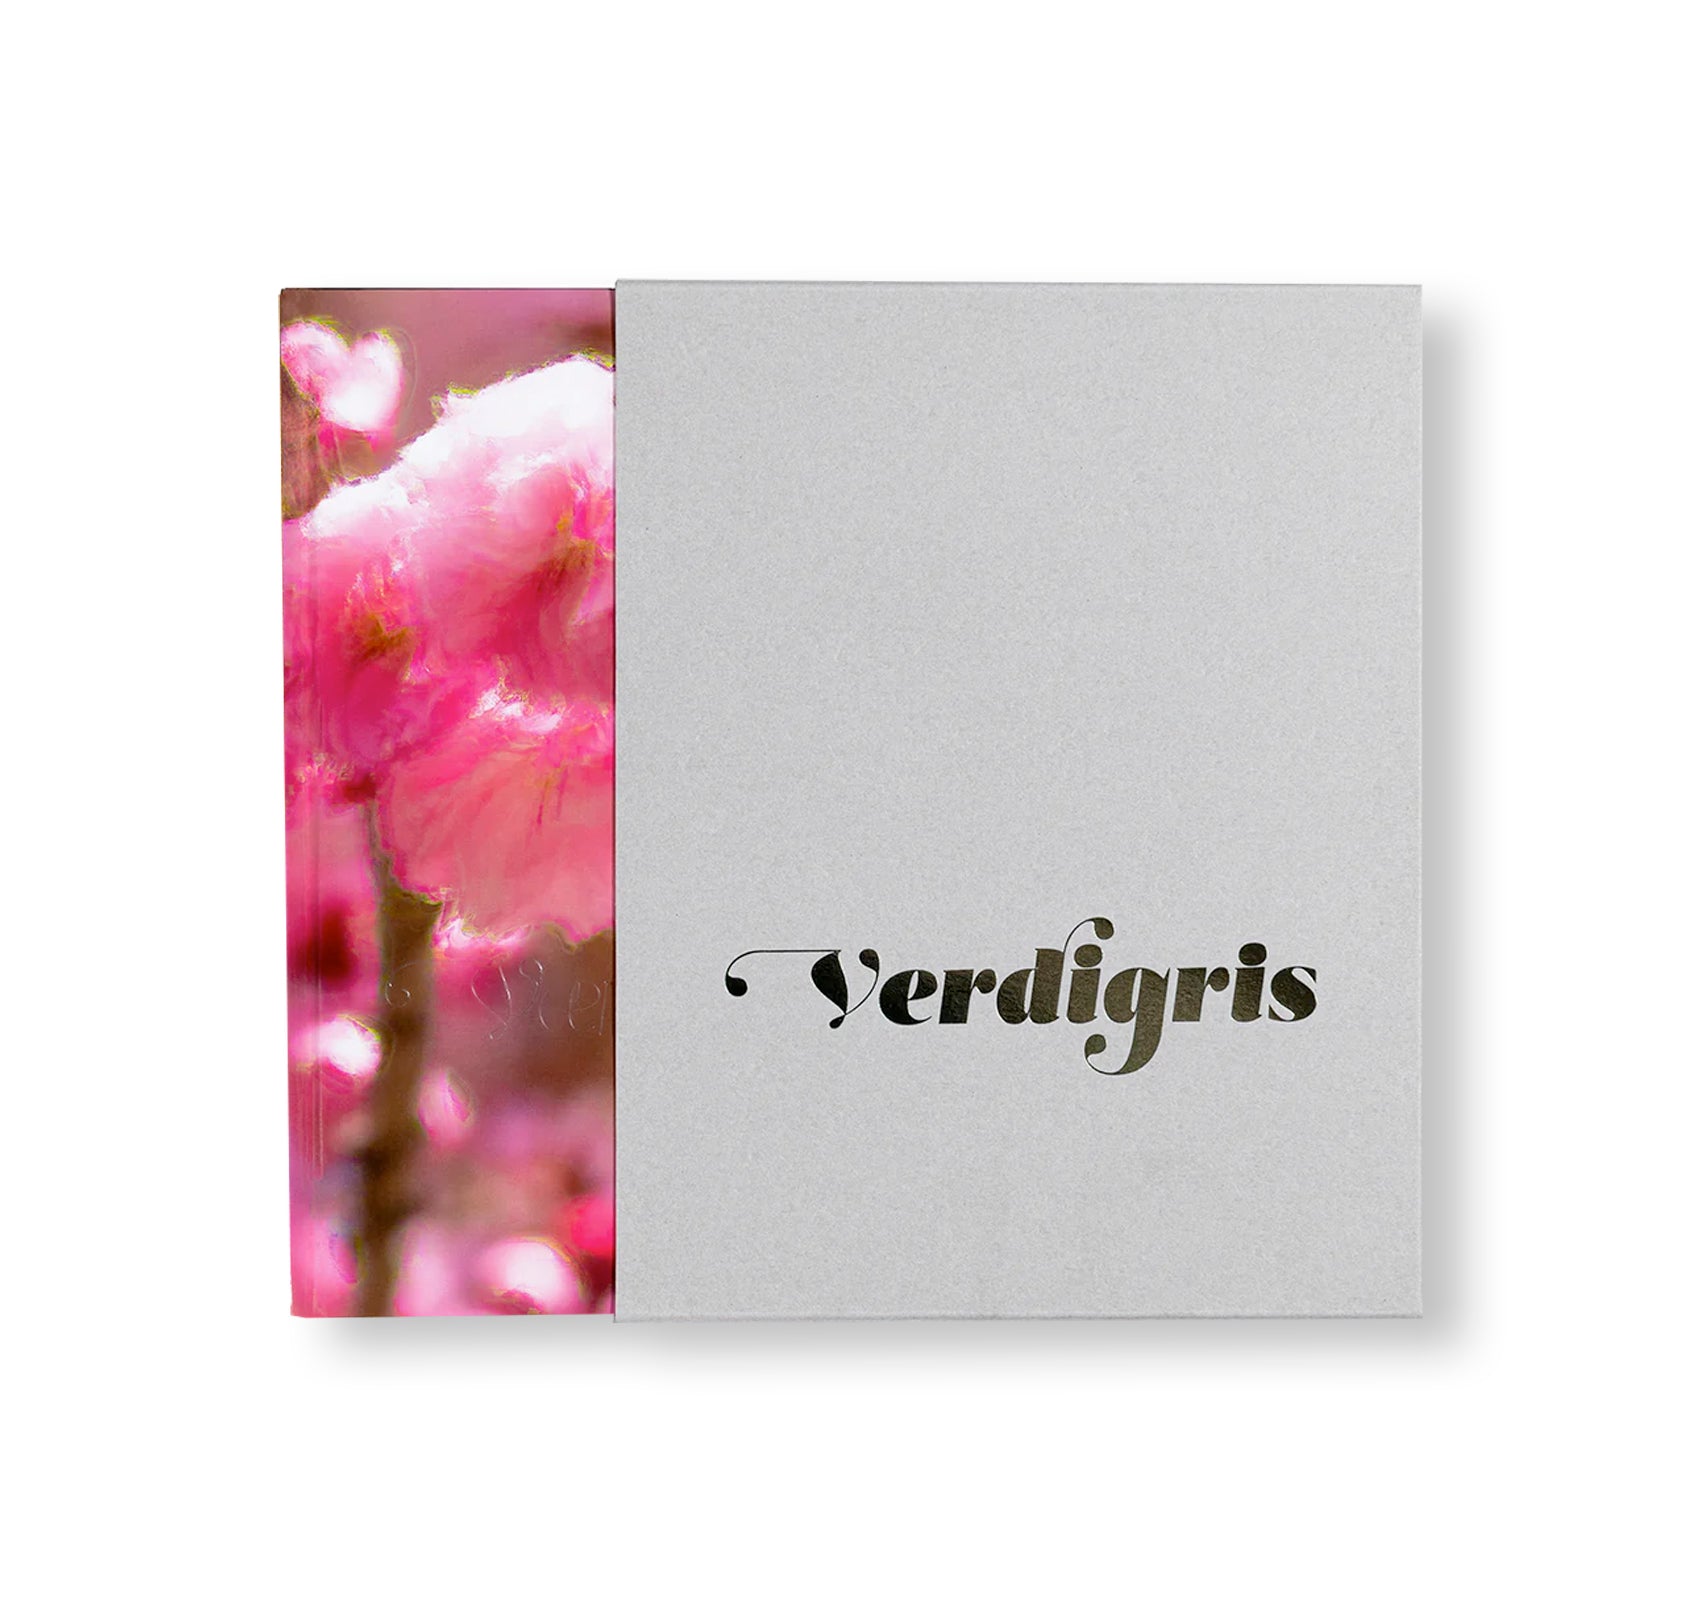 VERDIGRIS / AMBERGRIS by Paul Graham [SIGNED]